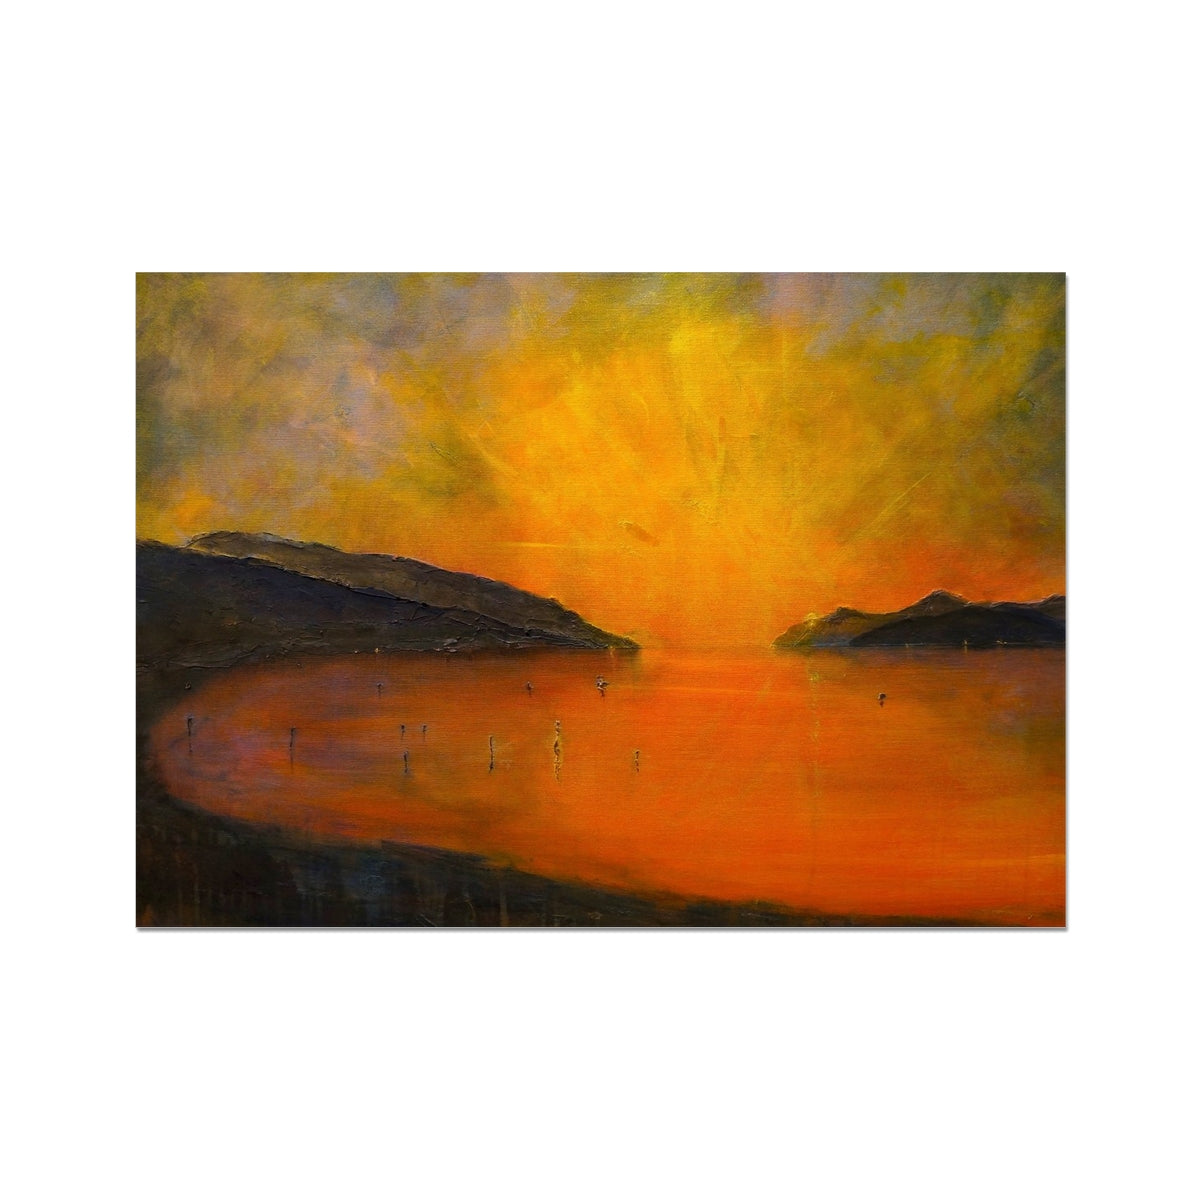 Loch Ness Sunset Painting | Fine Art Prints From Scotland-Unframed Prints-Scottish Lochs & Mountains Art Gallery-A2 Landscape-Paintings, Prints, Homeware, Art Gifts From Scotland By Scottish Artist Kevin Hunter